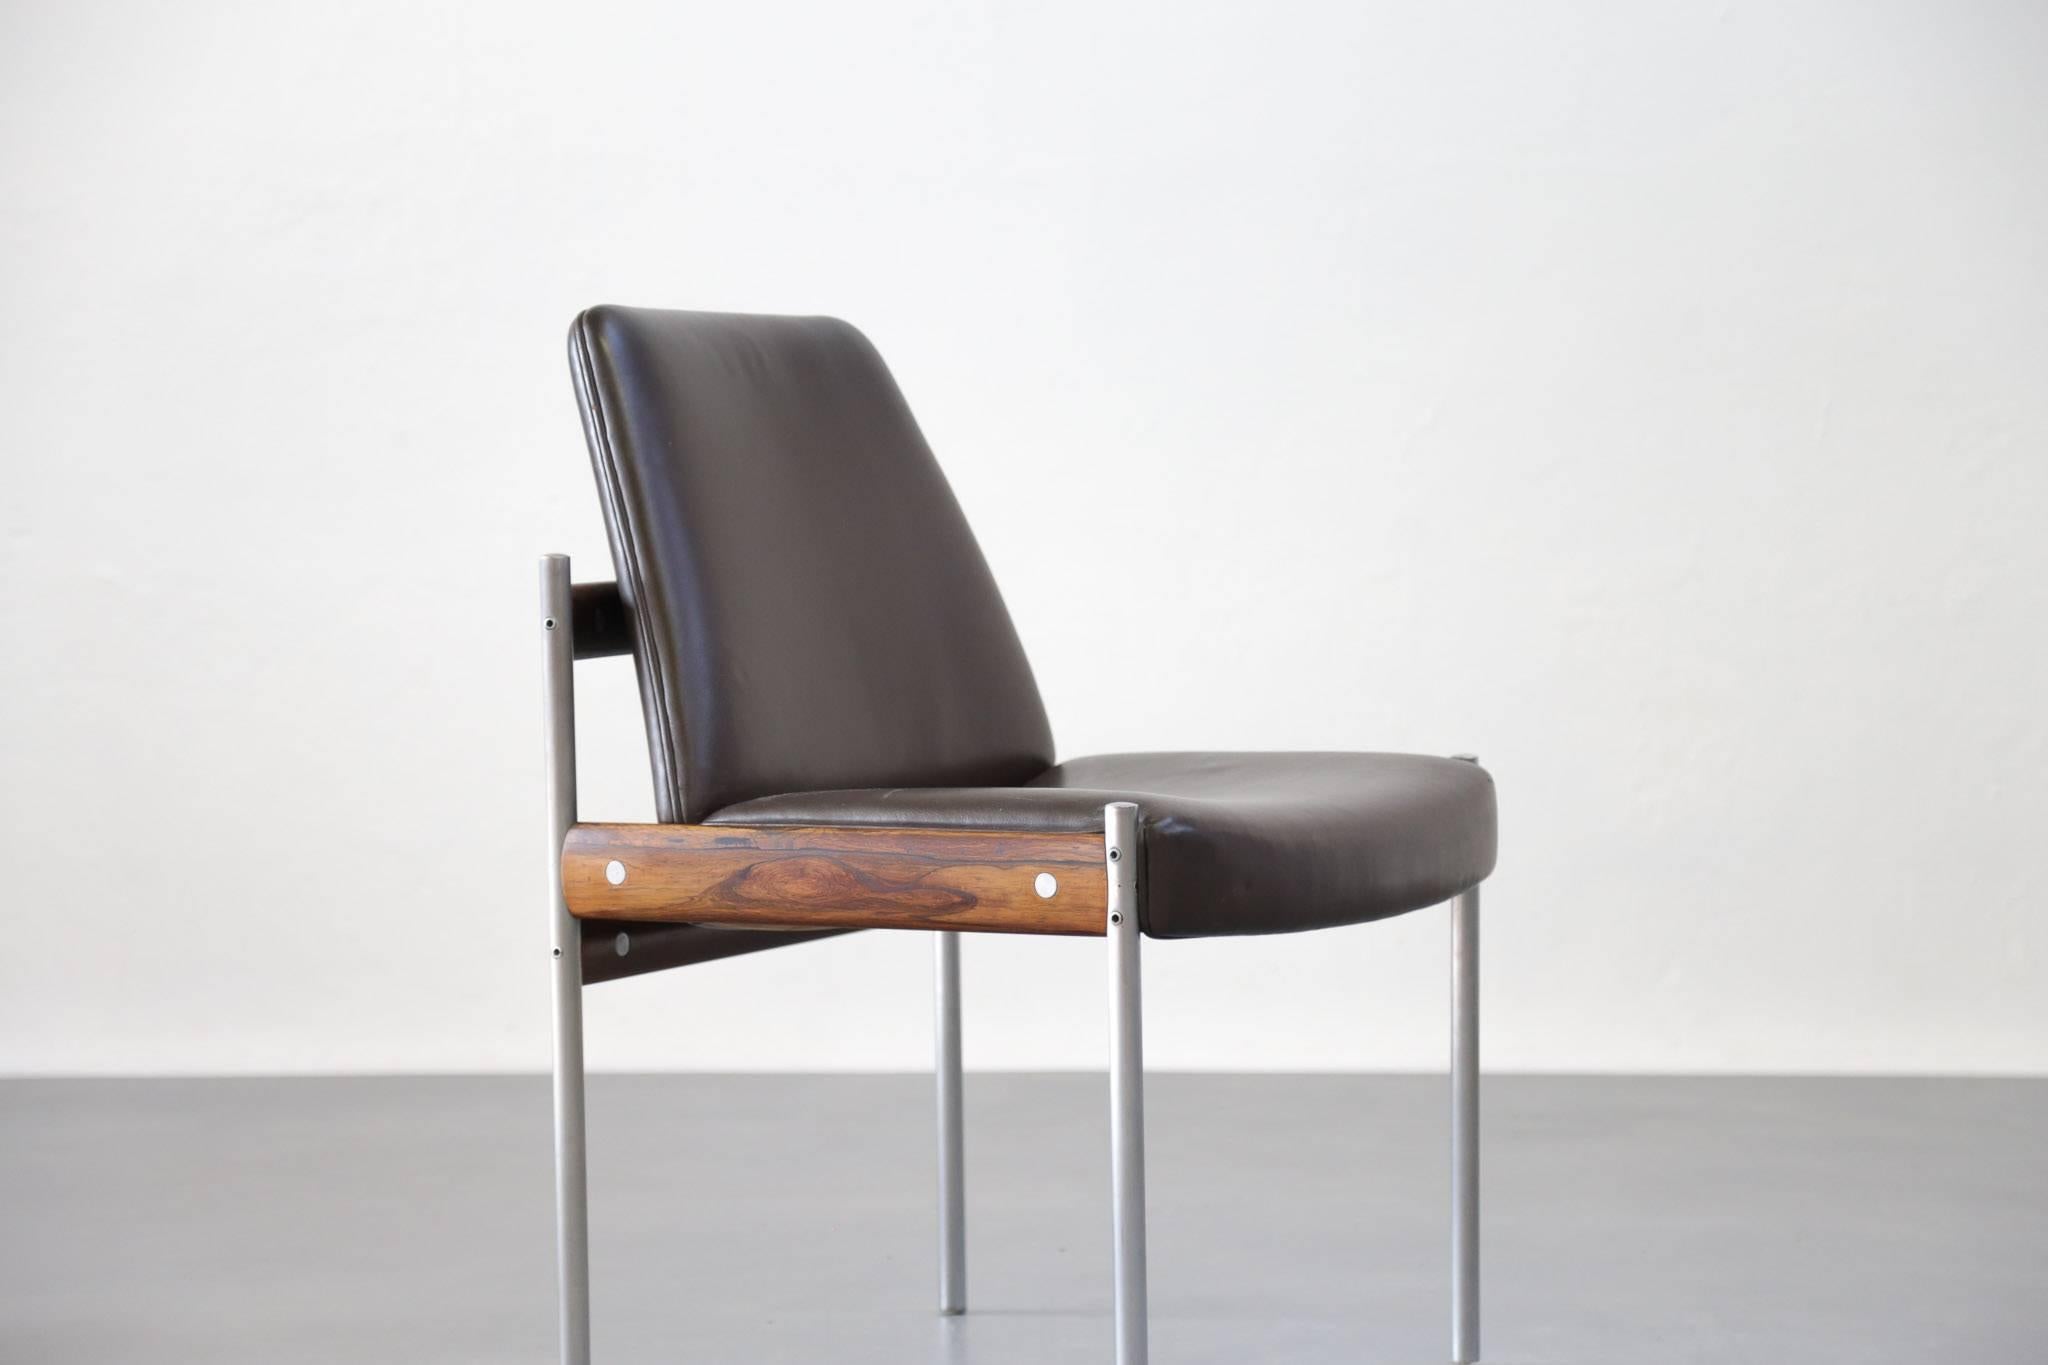 Steel Rare Set of Four Scandinavian Chairs by Sven Ivar Dysthe, Danish